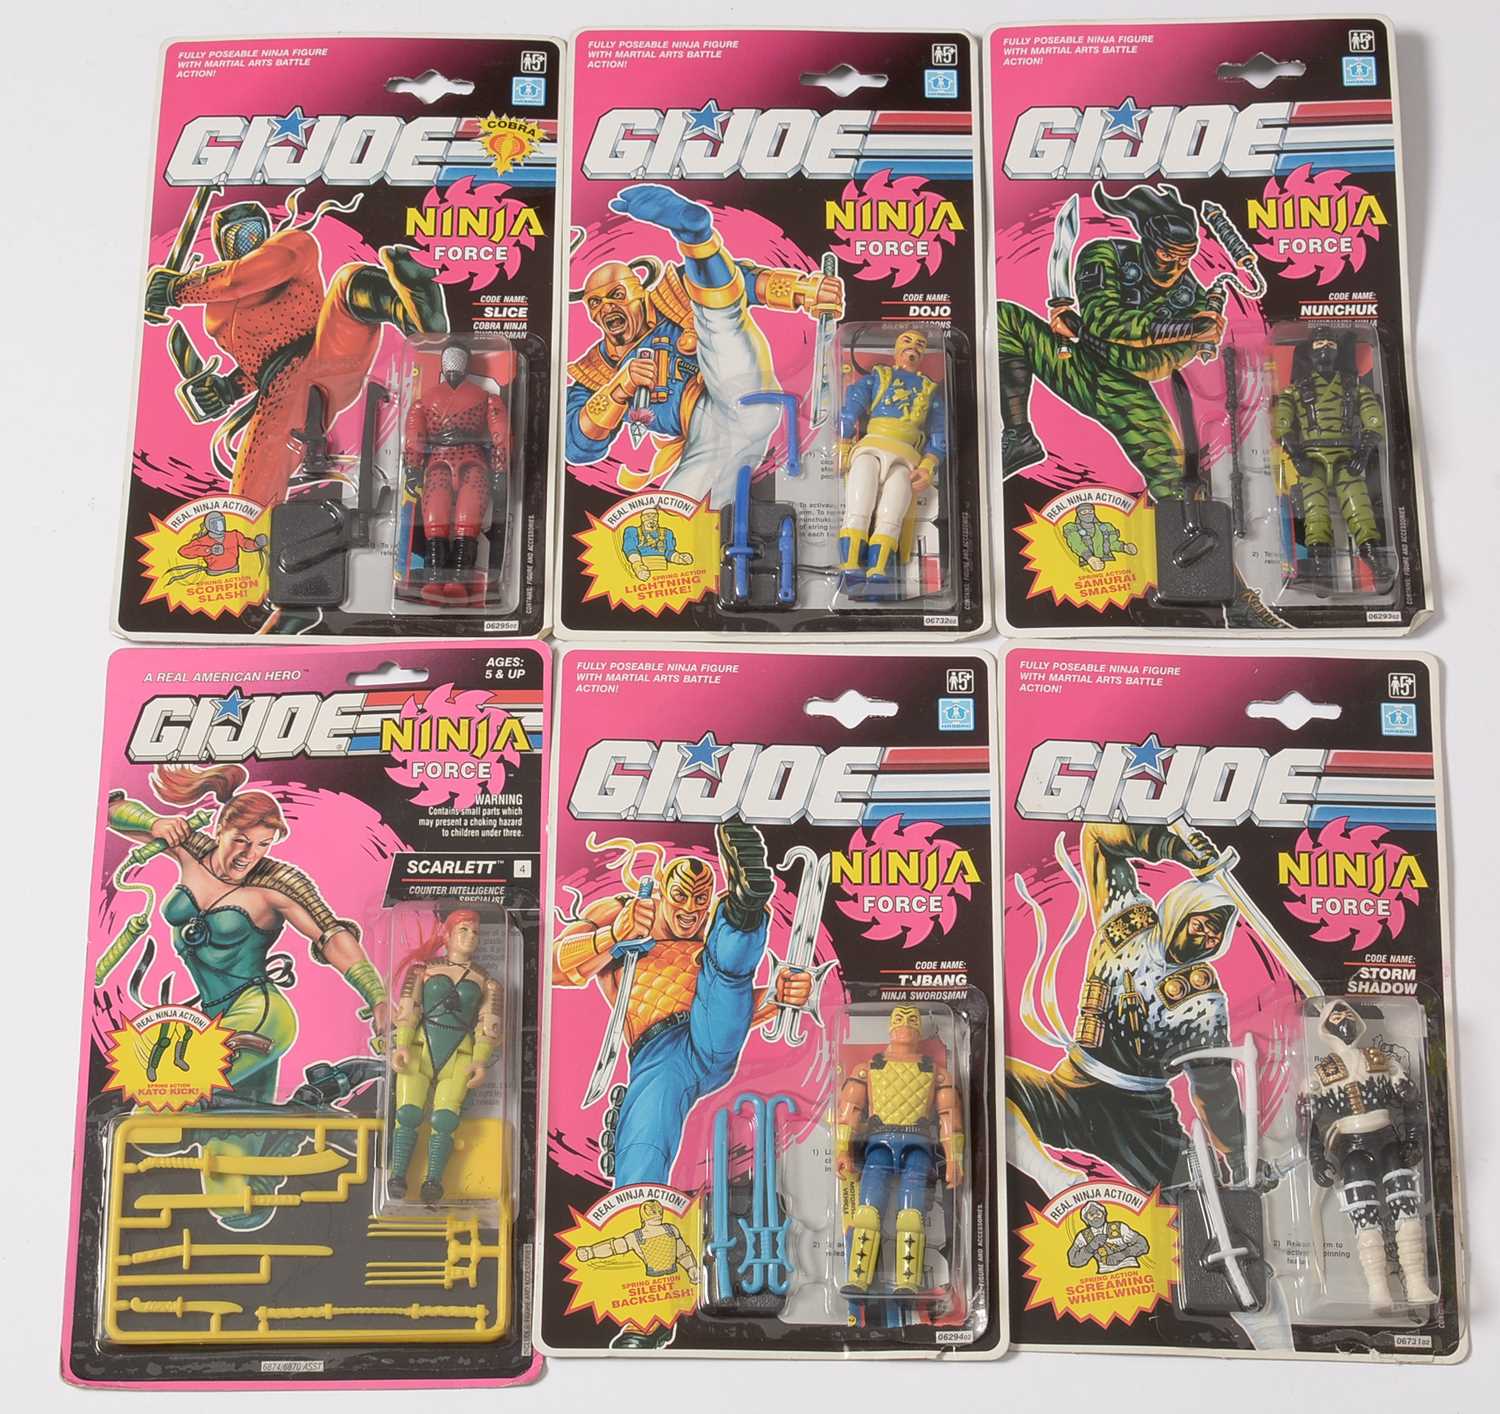 179 - Hasbro G.I. Joe Ninja Force figurines.